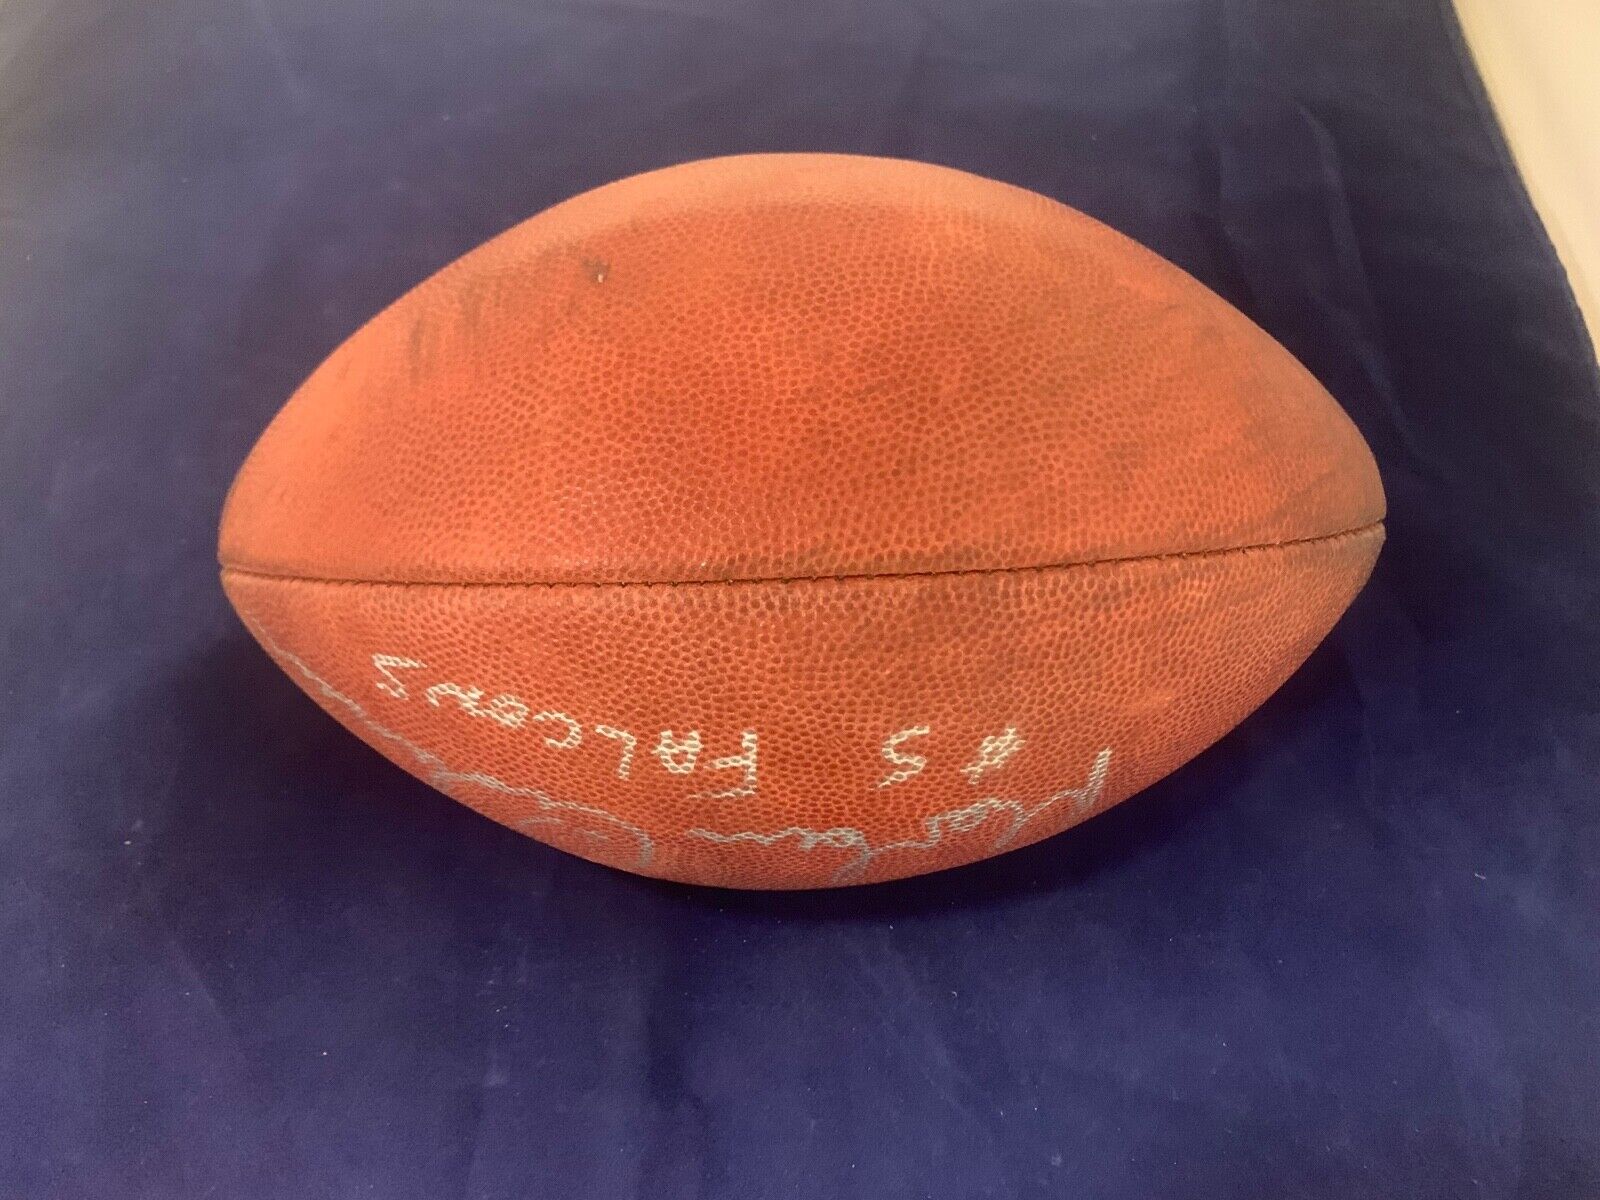 Morton Anderson Autograph Game Used Falcons Duke Football with JSA COA R02451